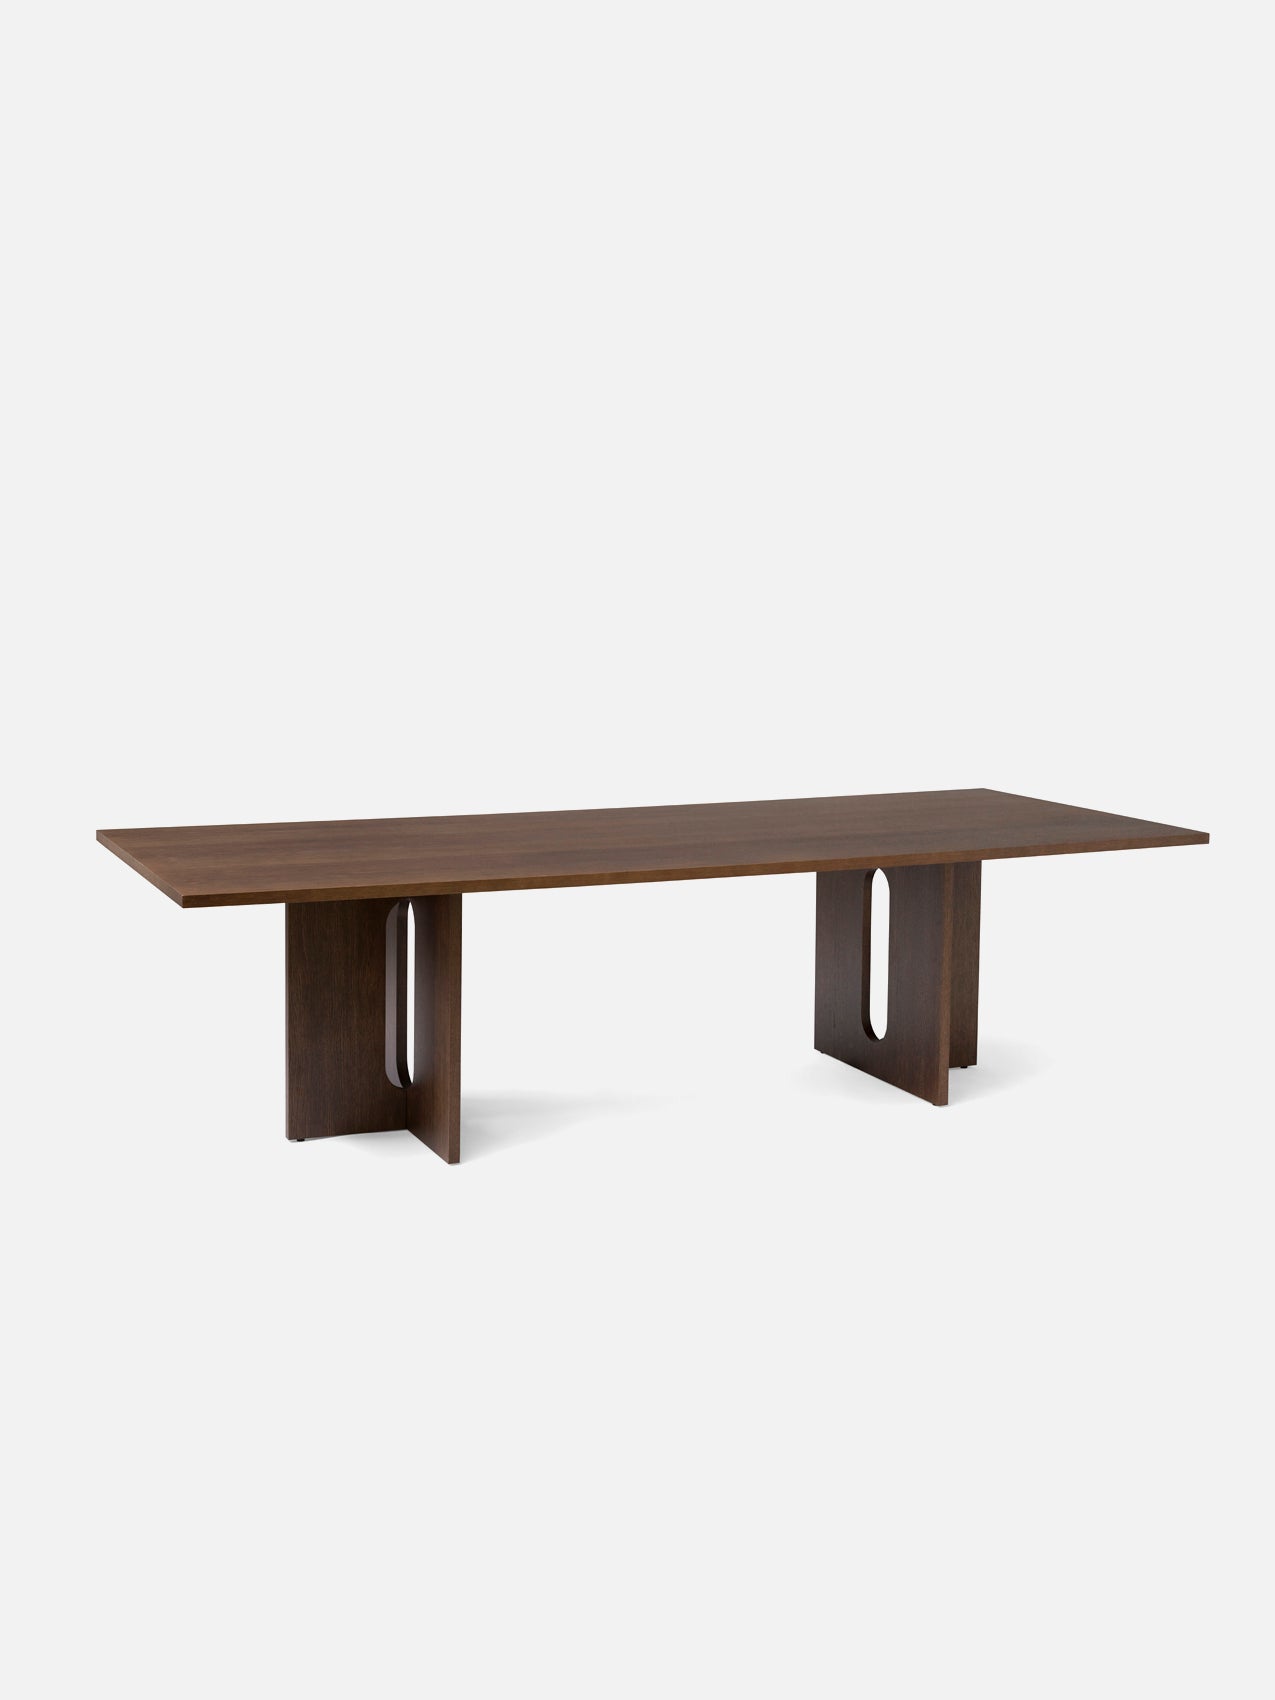 Androgyne Dining Table, Rectangular-Dining Table-Danielle Siggerud-Dining Height (111in)/Natural Oak-Rectangular - Dark Stained Oak-menu-minimalist-modern-danish-design-home-decor